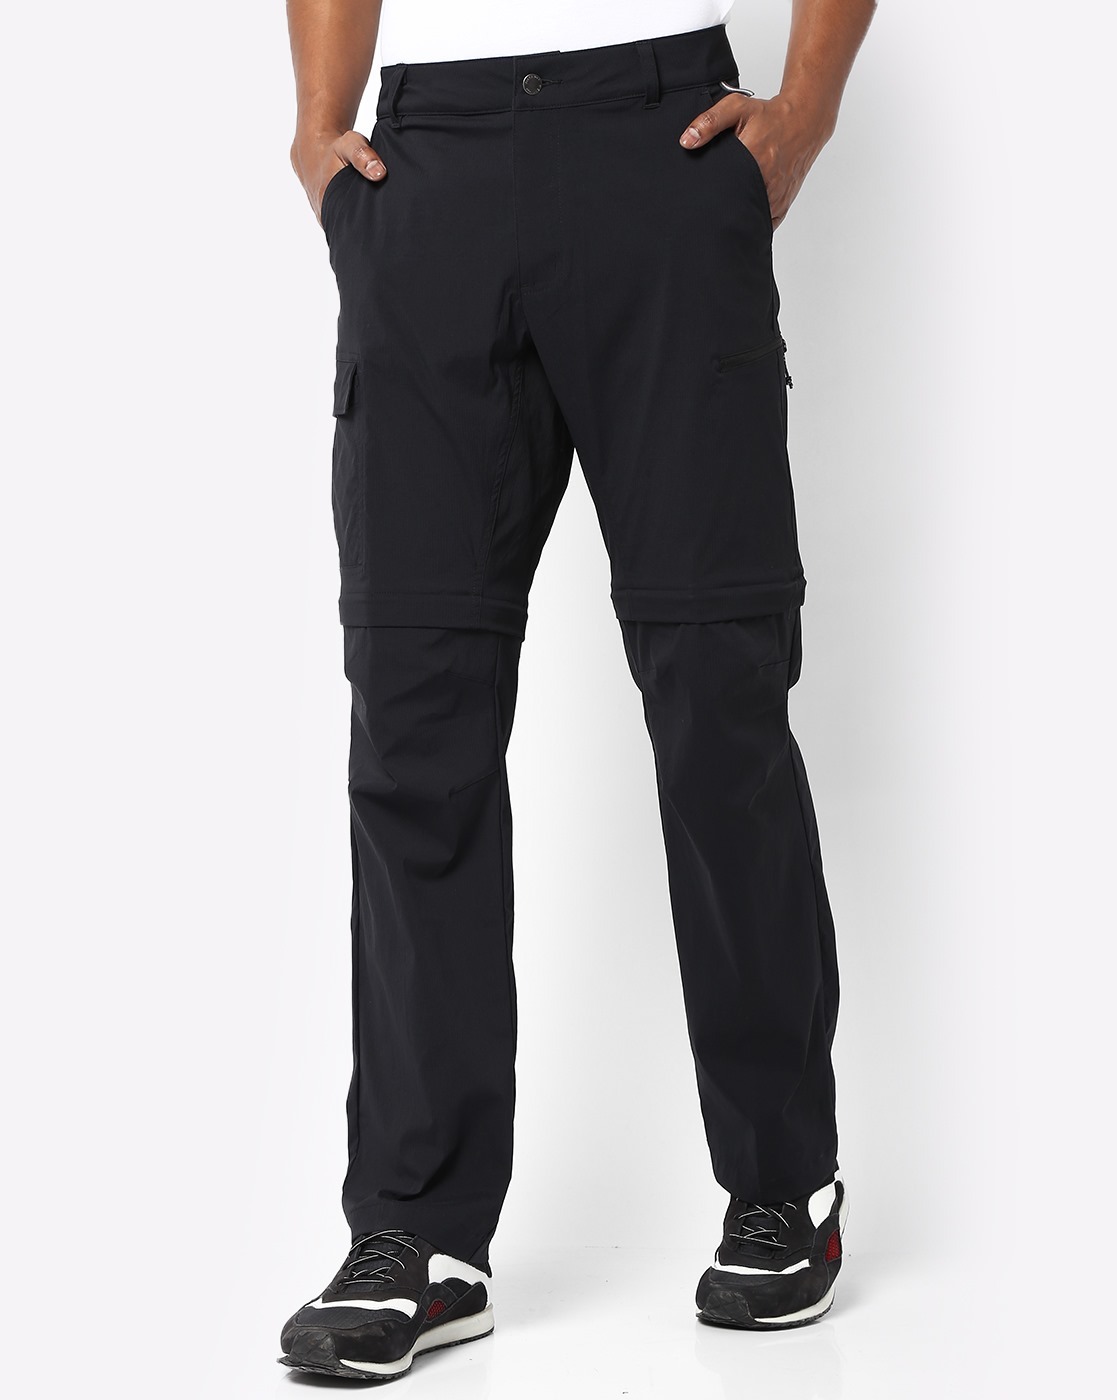 Buy Blue Newton Ridge Ii Pant for Men Online at Columbia Sportswear  488064